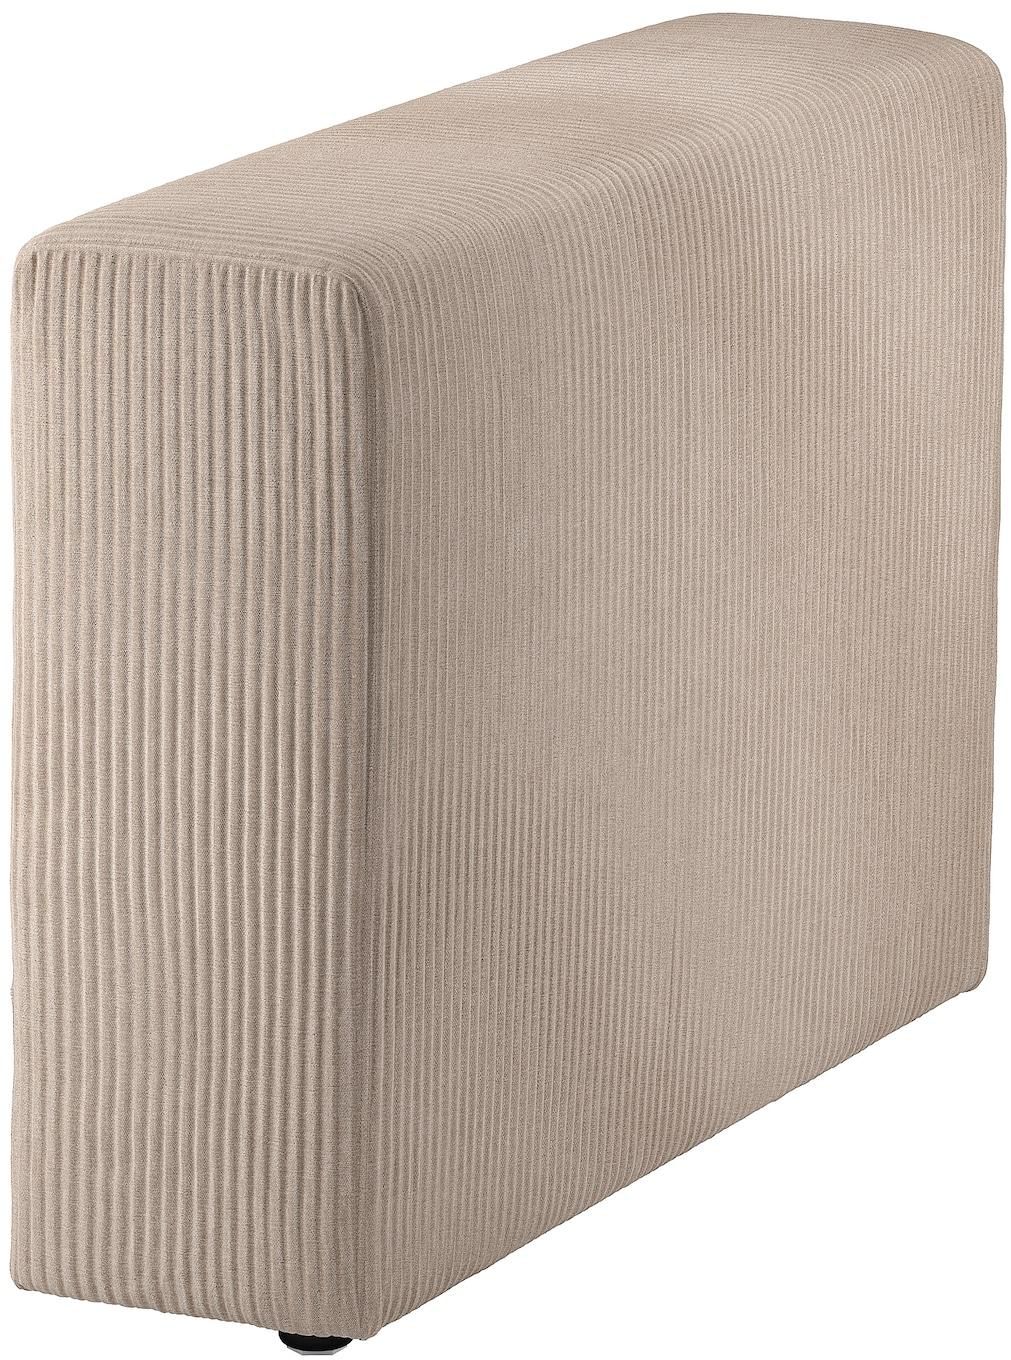 JÄTTEBO Cover for armrest - Samsala grey-beige